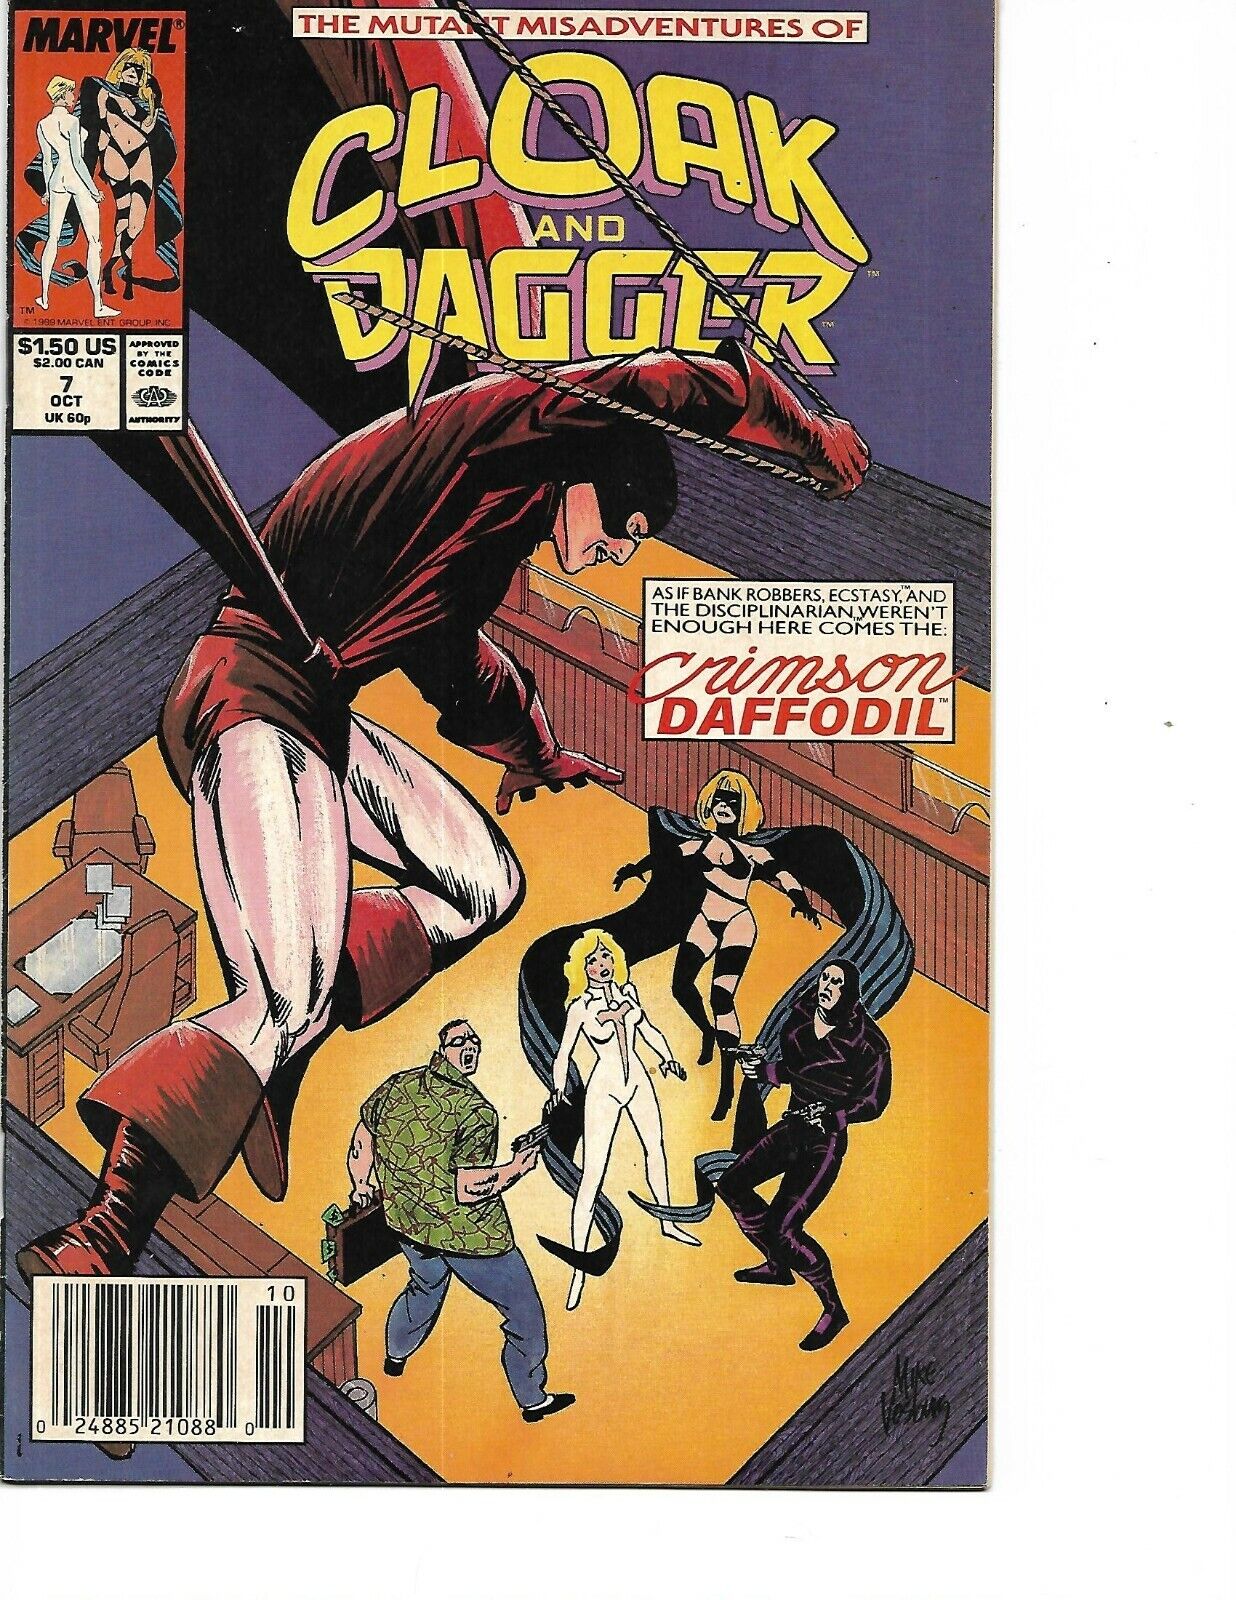 Mutant Misadventures of Cloak and Dagger #7 Ecstasy (Oct 1989 Marvel) Near Mint